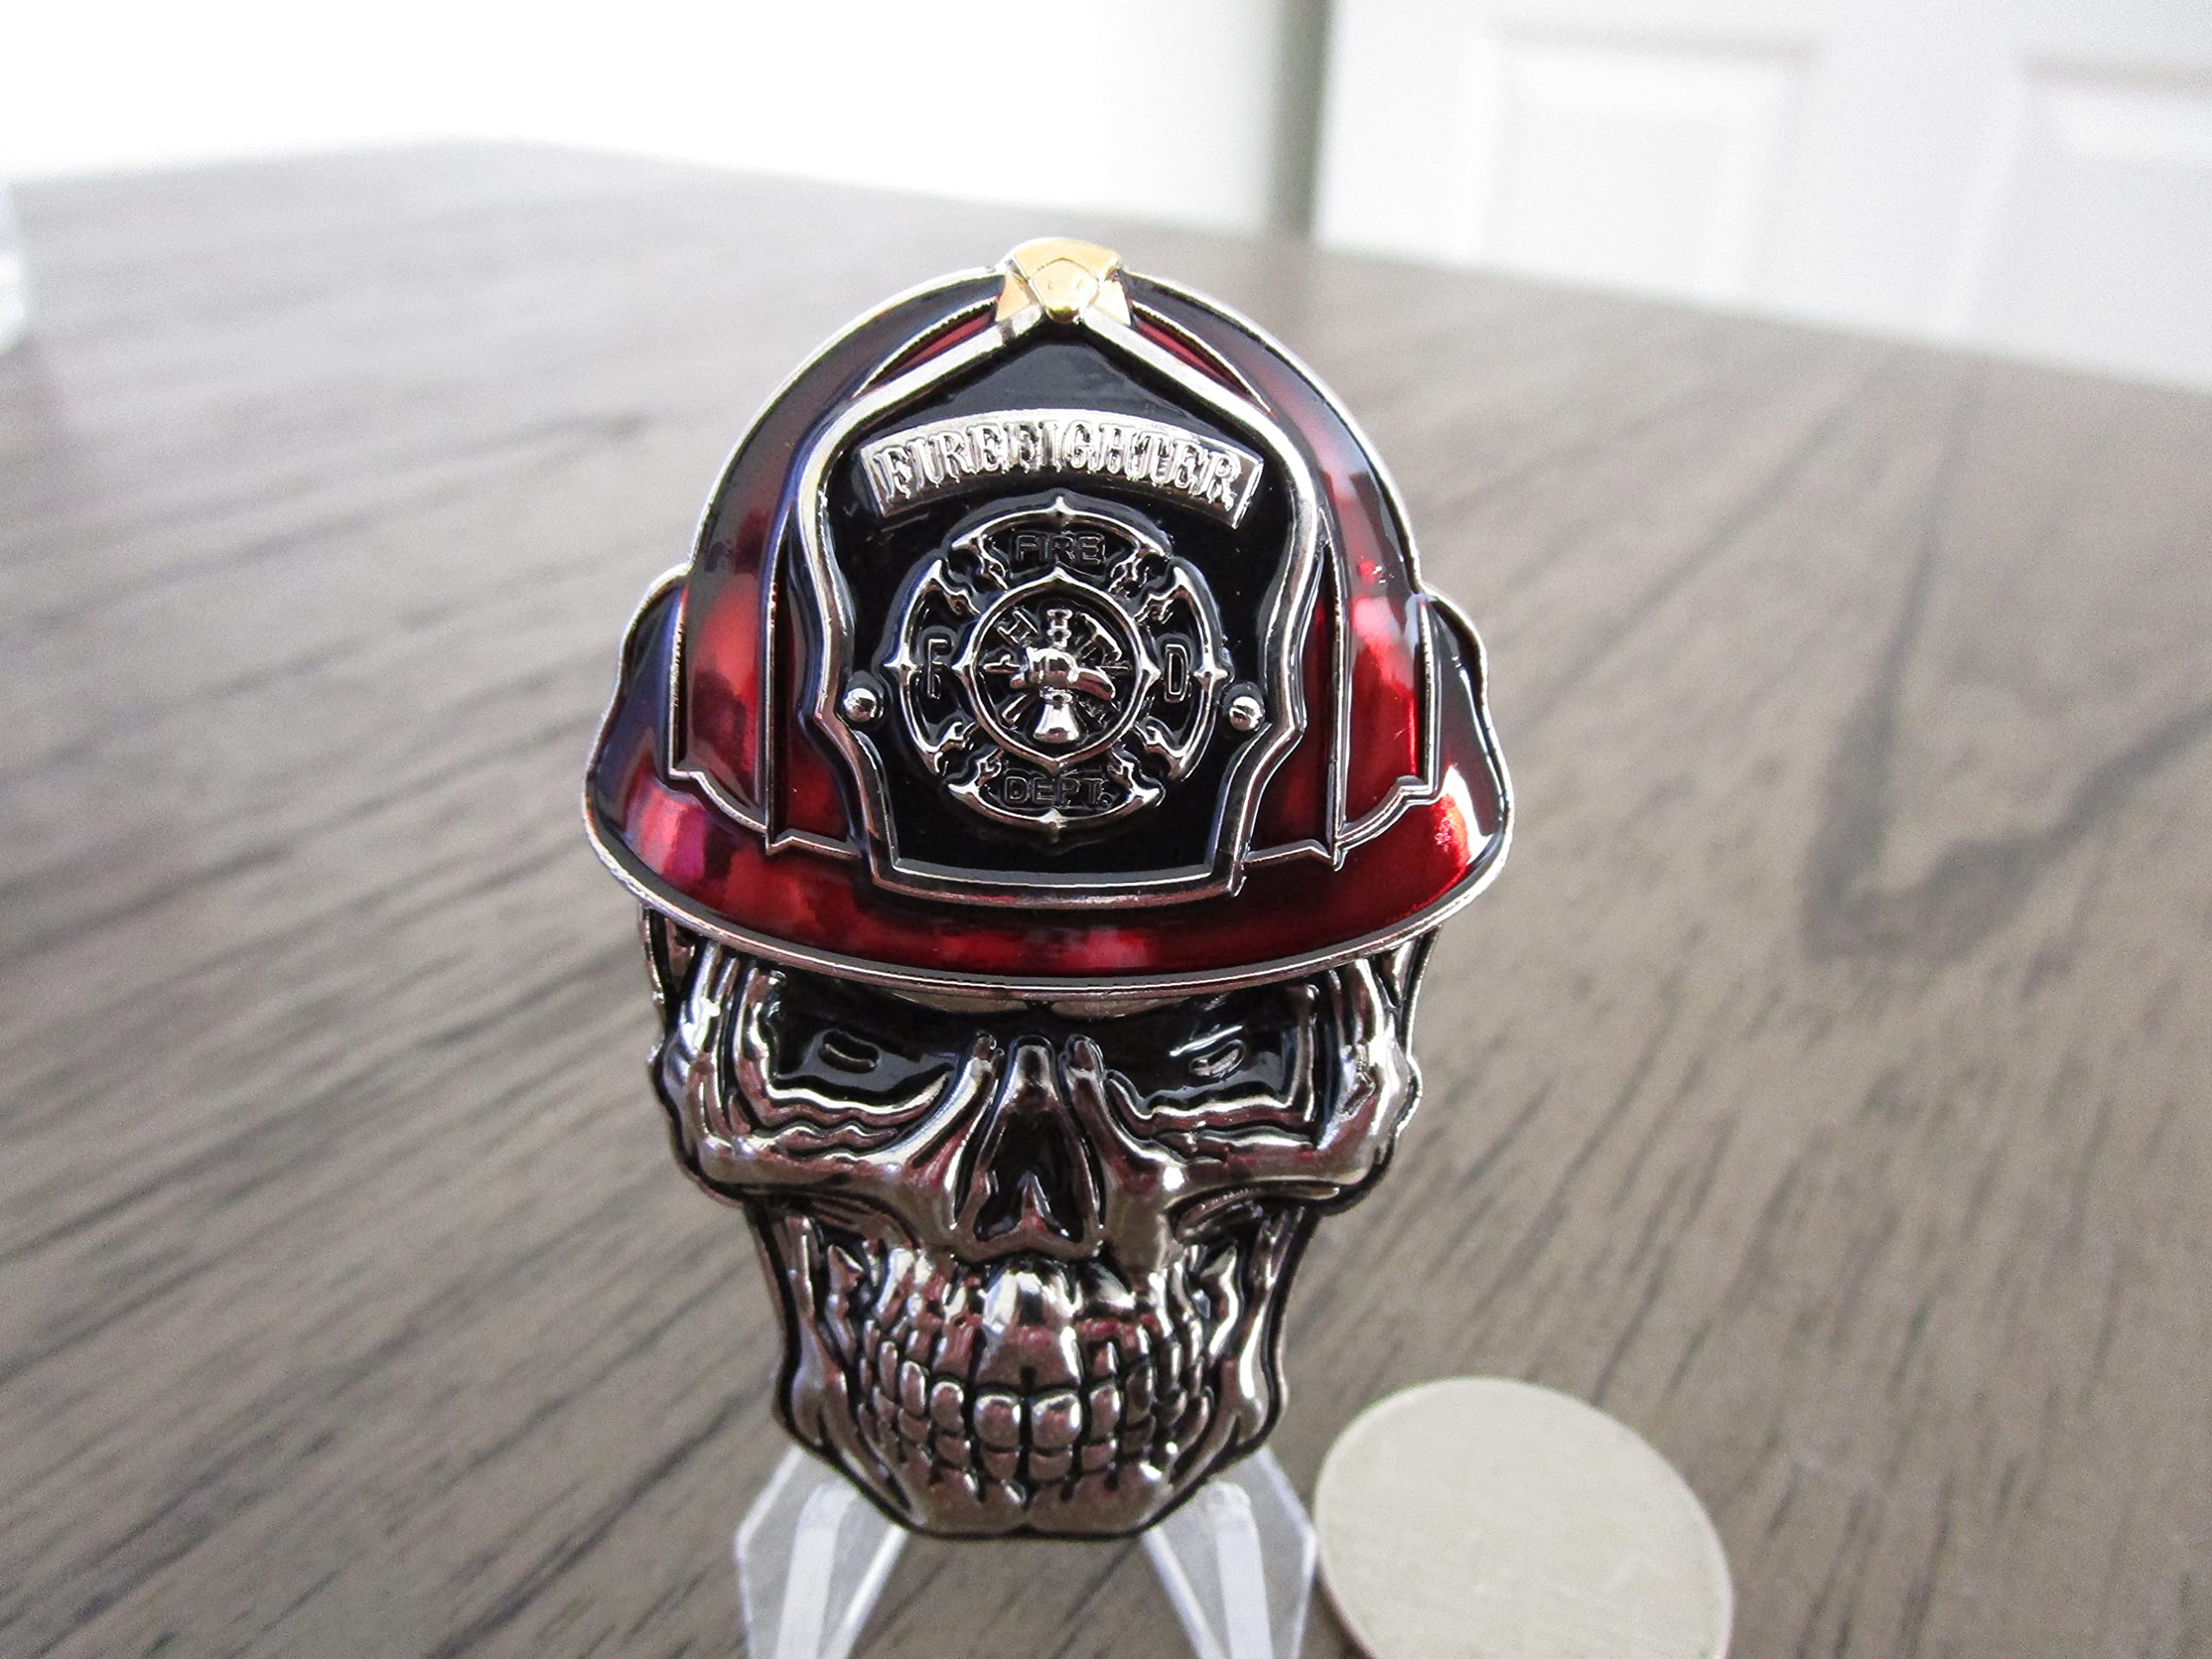 Firefighter First Responder Prayer Skull Challenge Coin